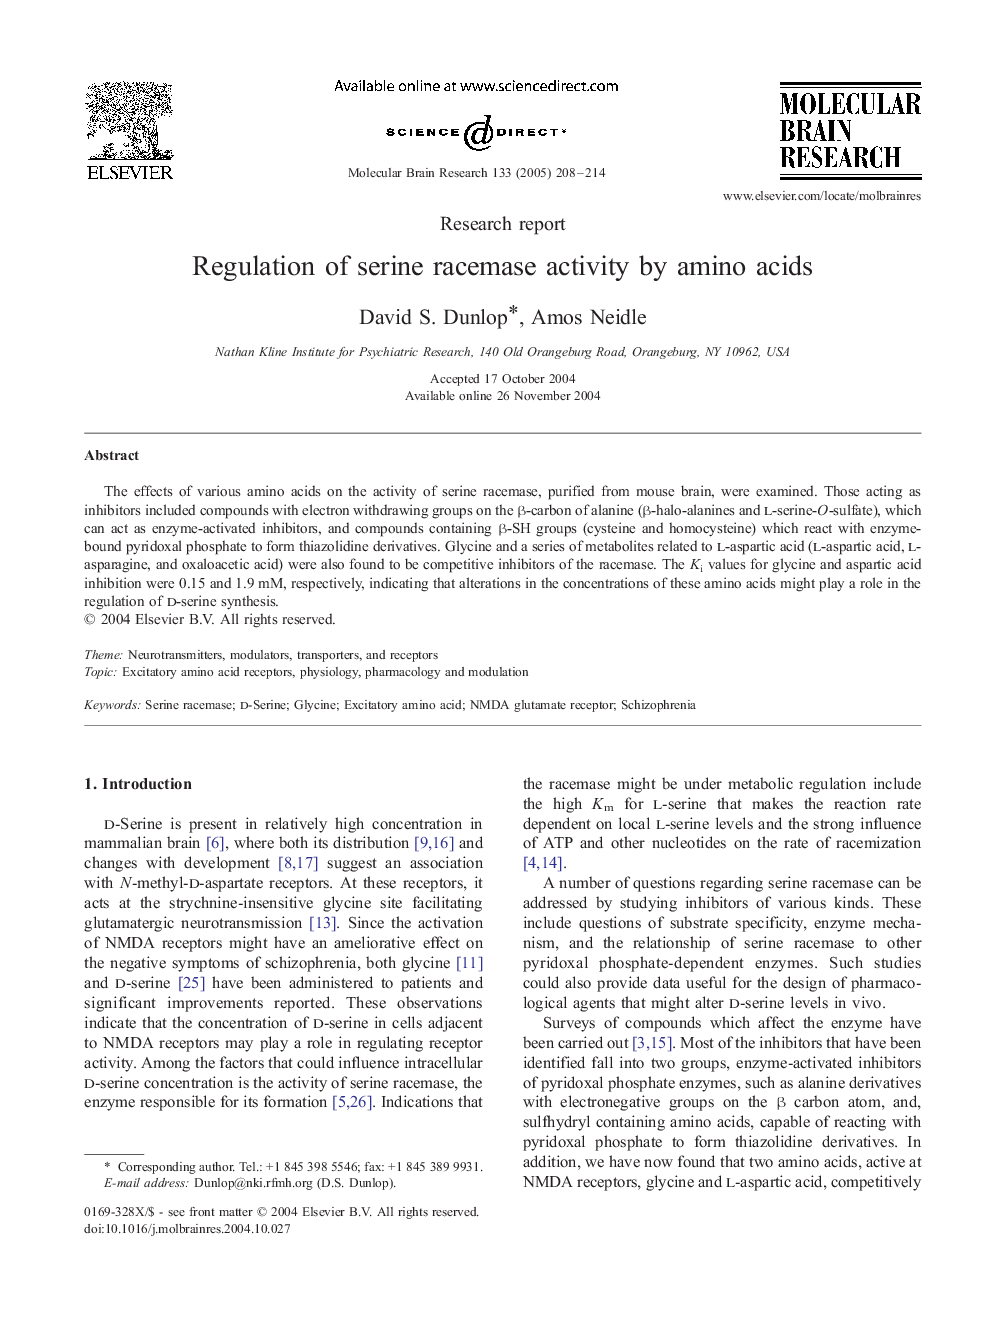 Regulation of serine racemase activity by amino acids